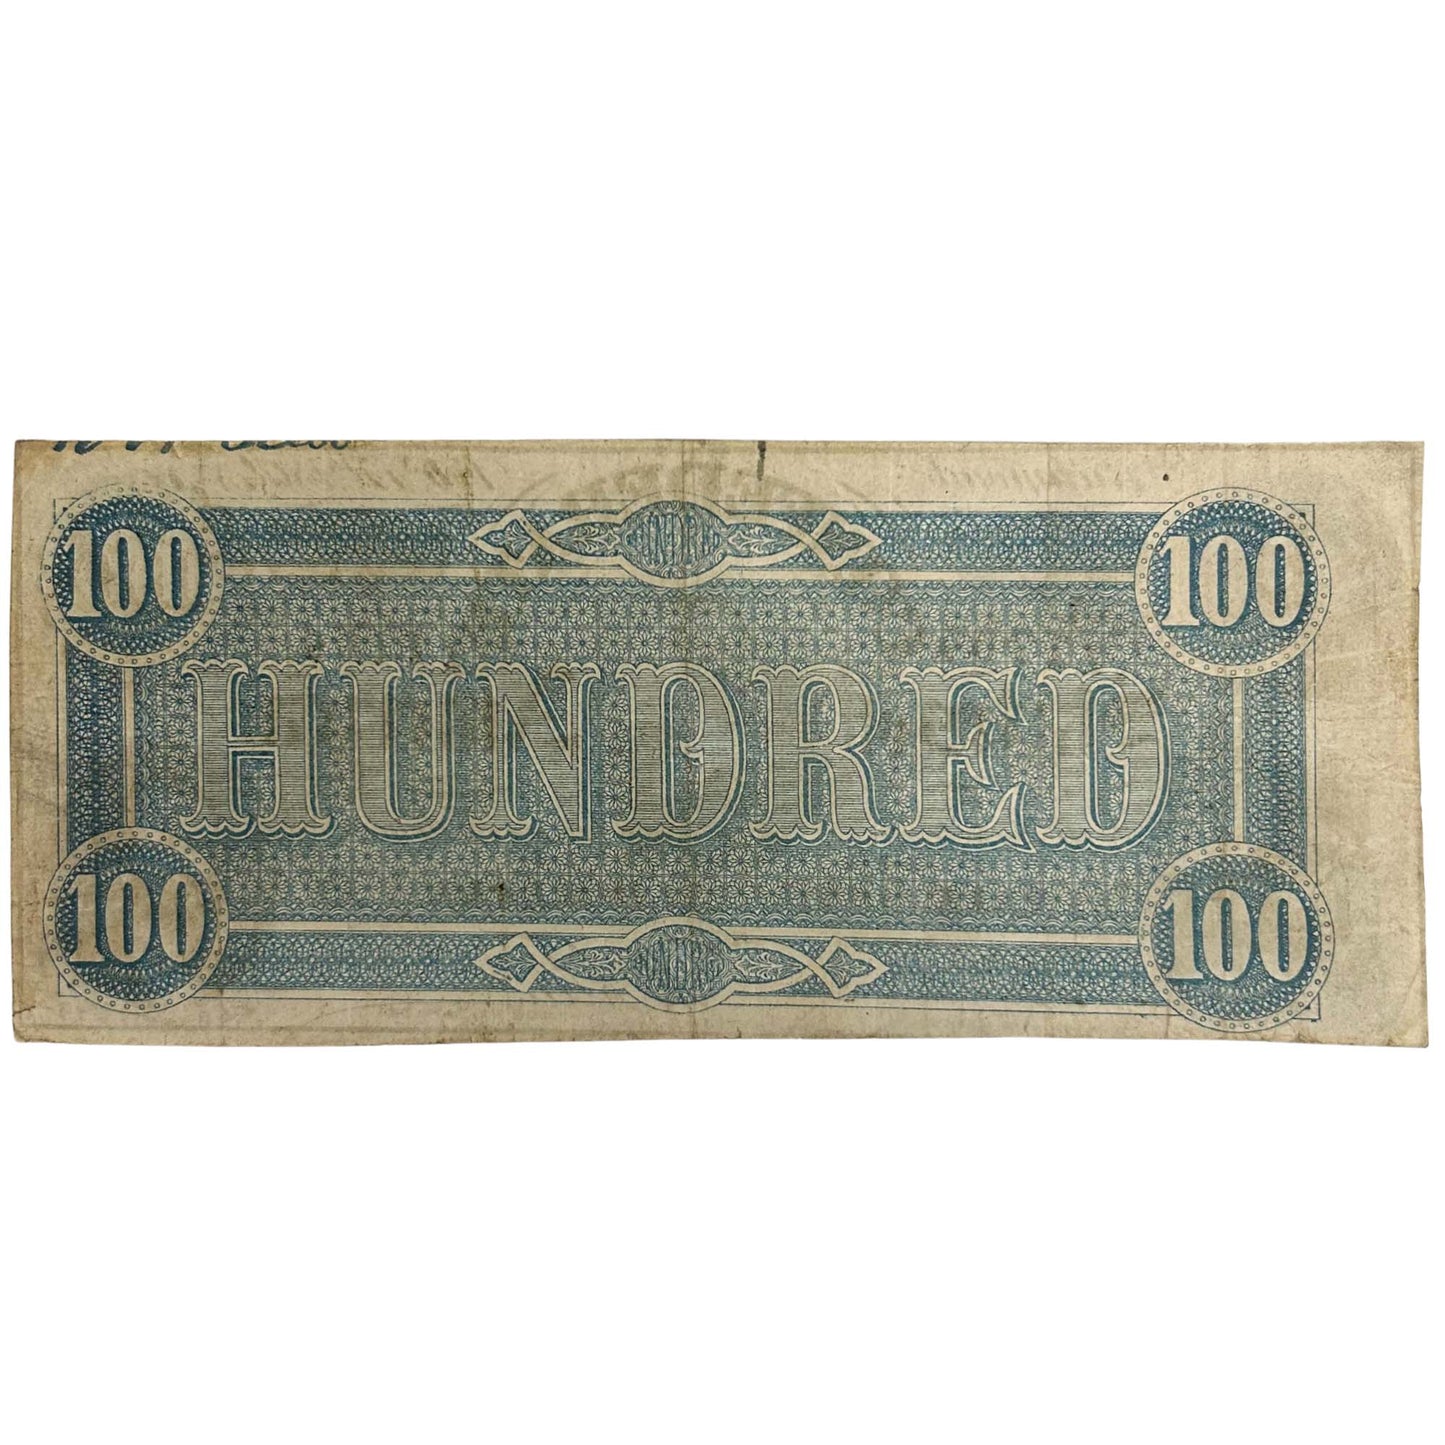 1864 Confederate States of America $100 Federal Reserve Note Back